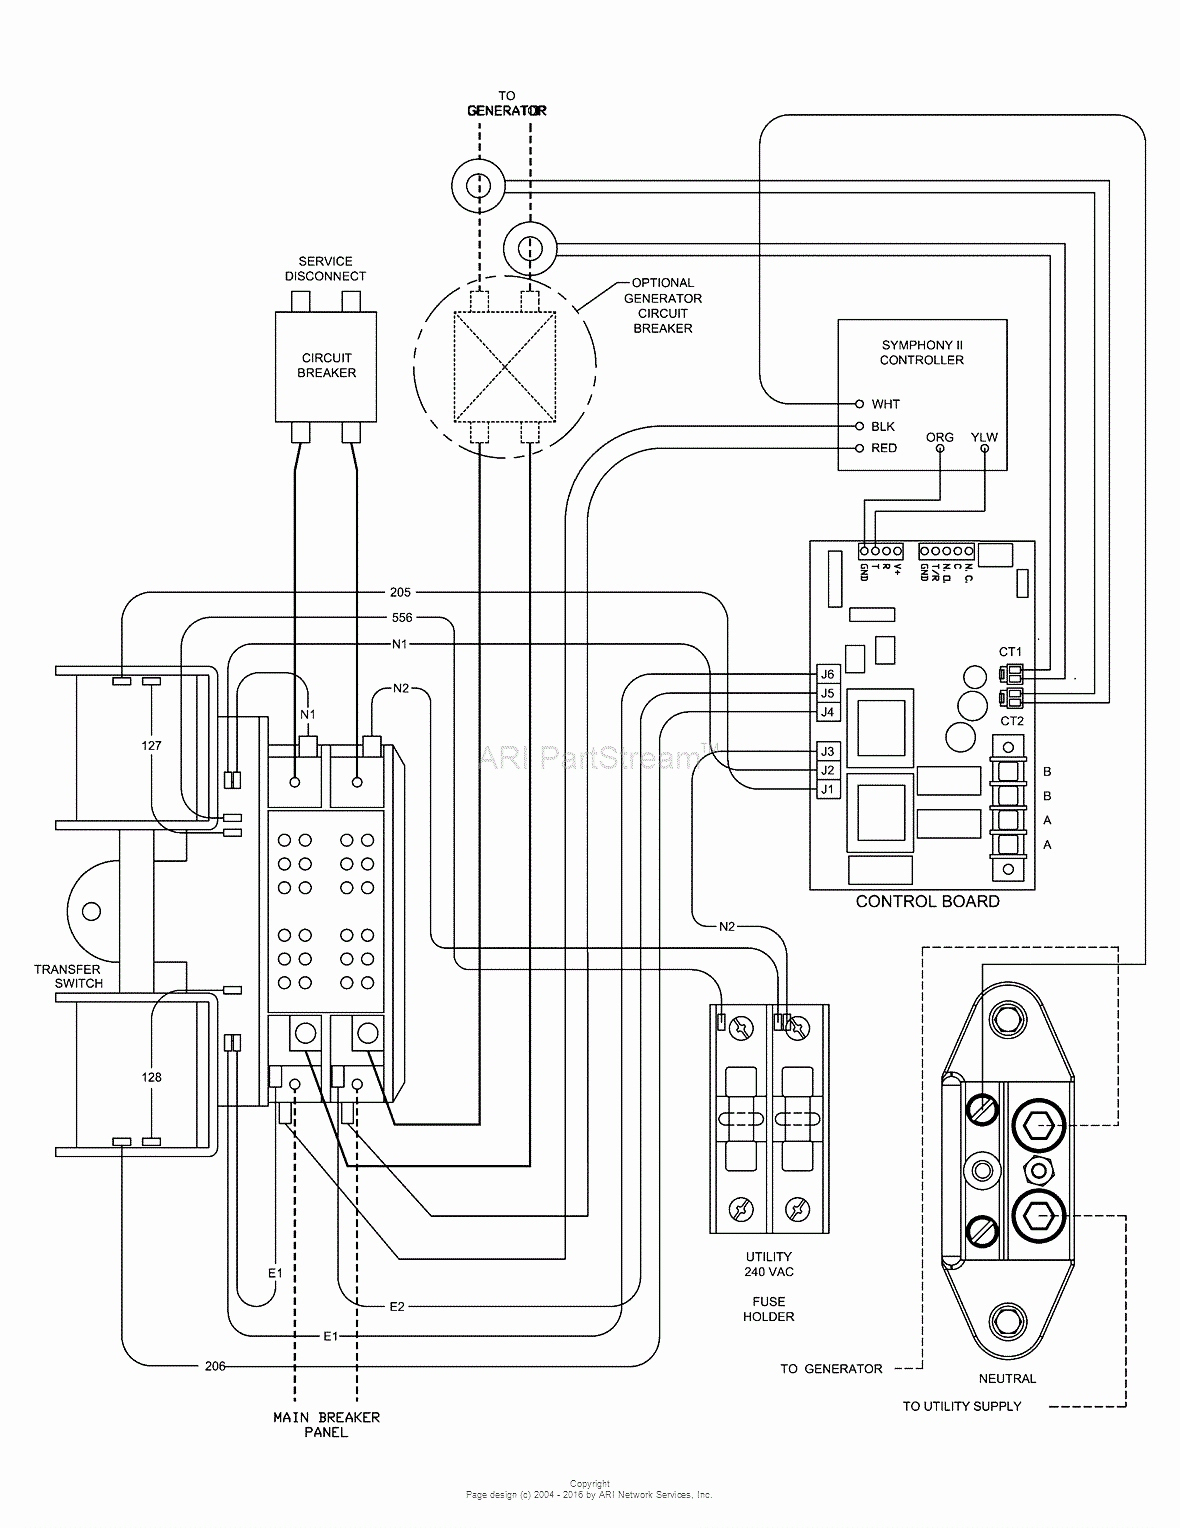 Generac 200 Amp Transfer Switch Wiring Diagram | Wiring Diagram - 200 Amp Automatic Transfer Switch Wiring Diagram